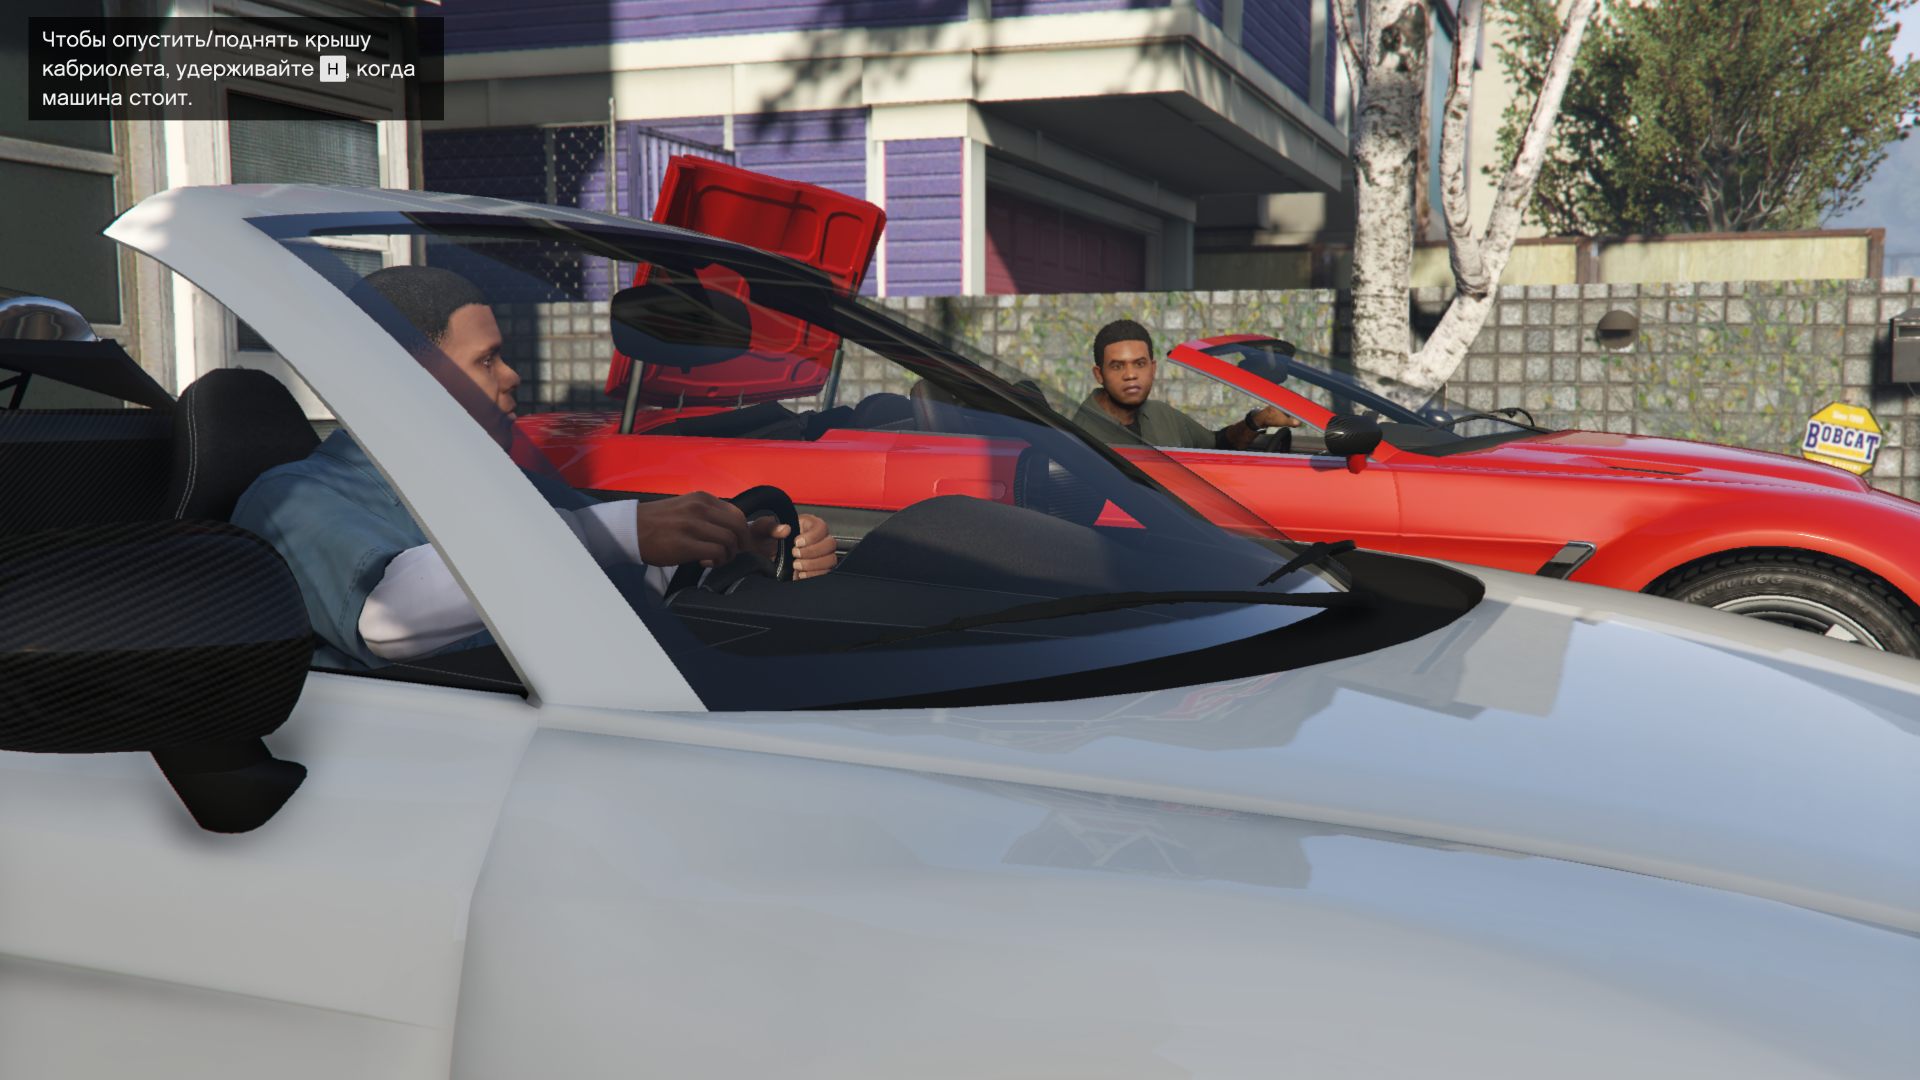 GTA 5 / Grand Theft Auto V [v 1.0.2802/1.64] (2015) PC | RePack от FitGirl